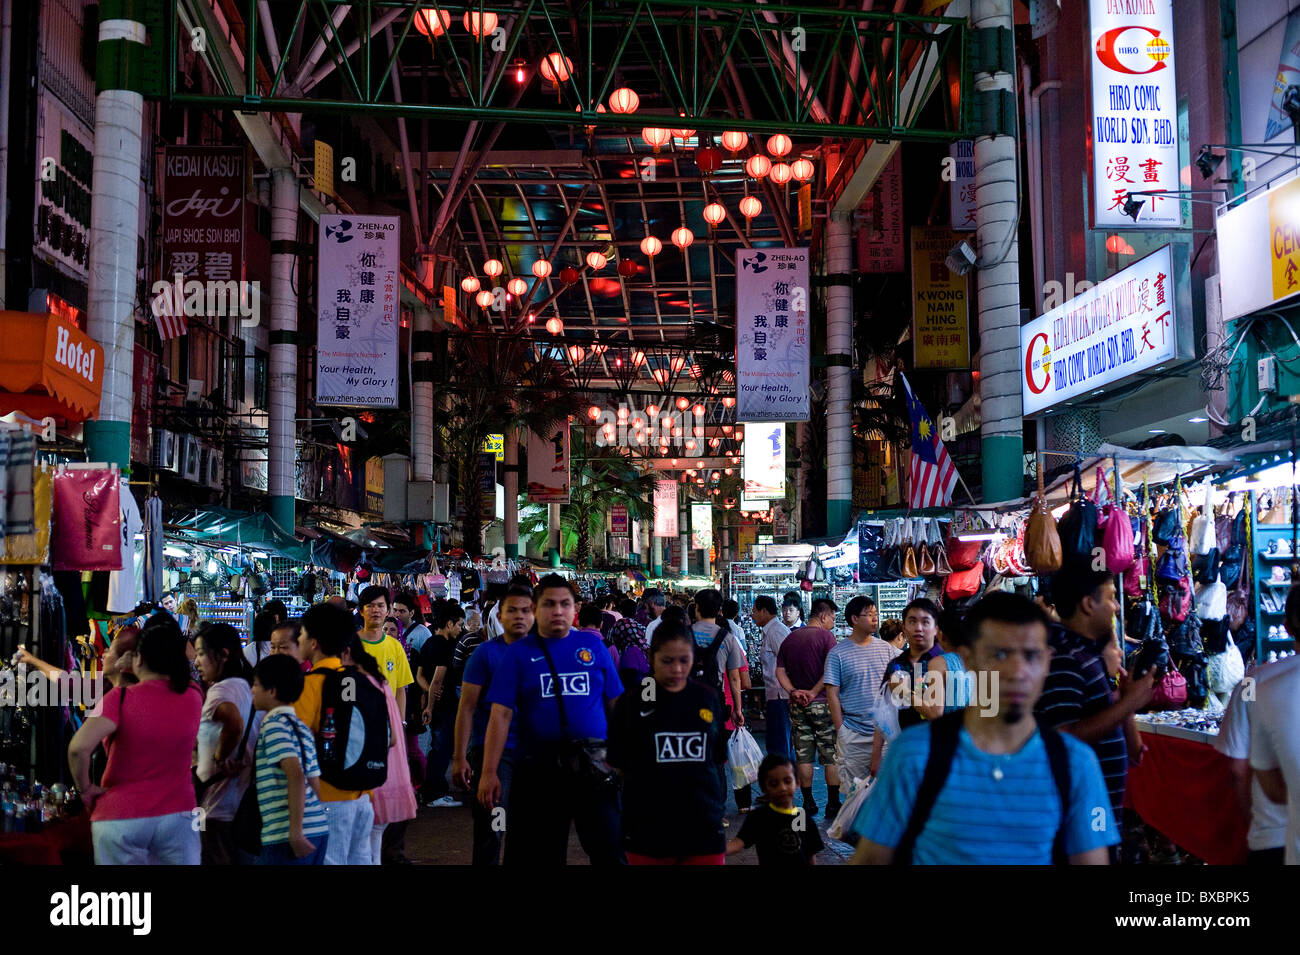 People in a street market at night in Kuala Lumpur. Stock Photo